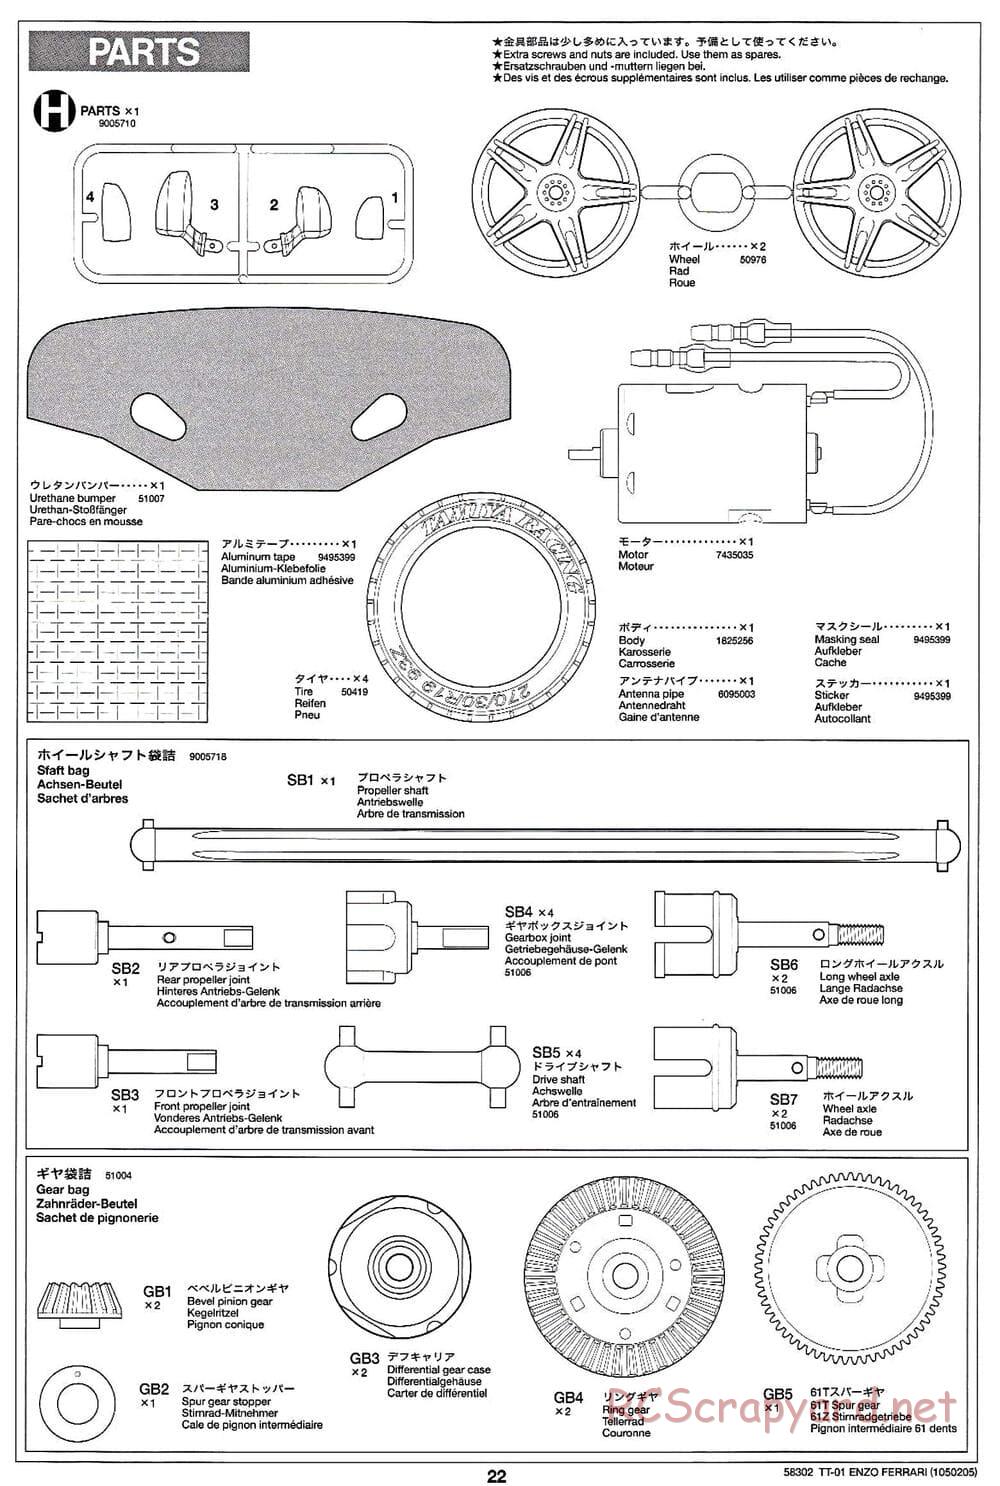 Tamiya - Enzo Ferrari - TT-01 Chassis - Manual - Page 22